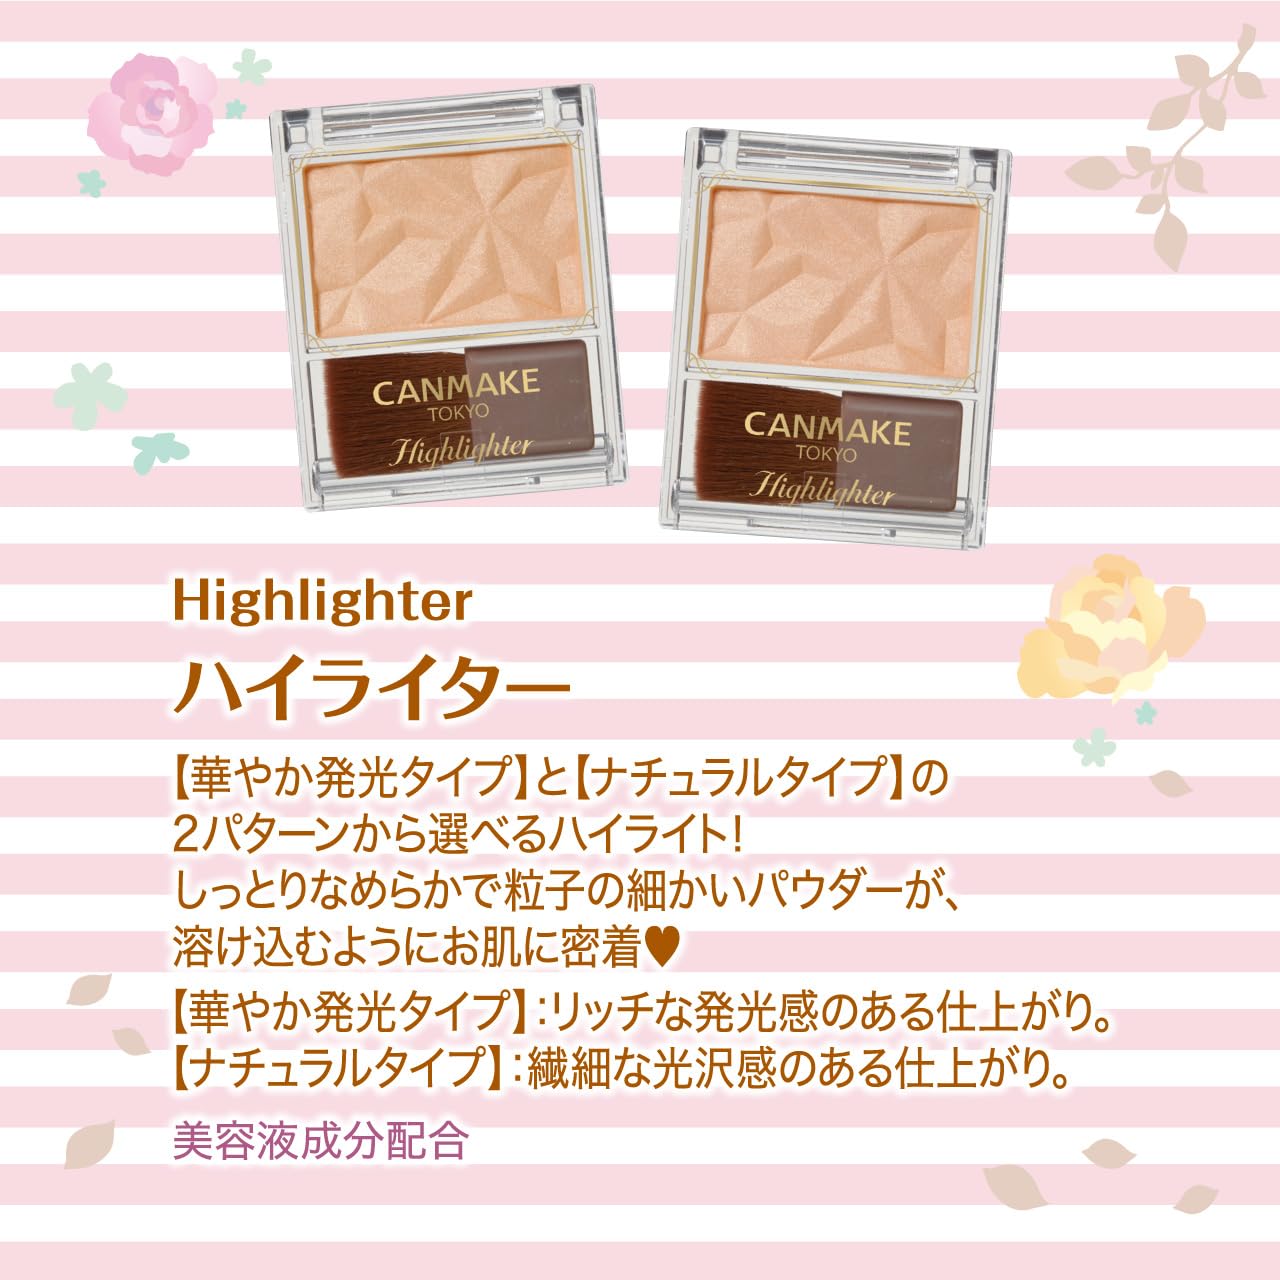 Canmake Highlighter H L01 Illuminating 4.5G Makeup Highlight Single Pack